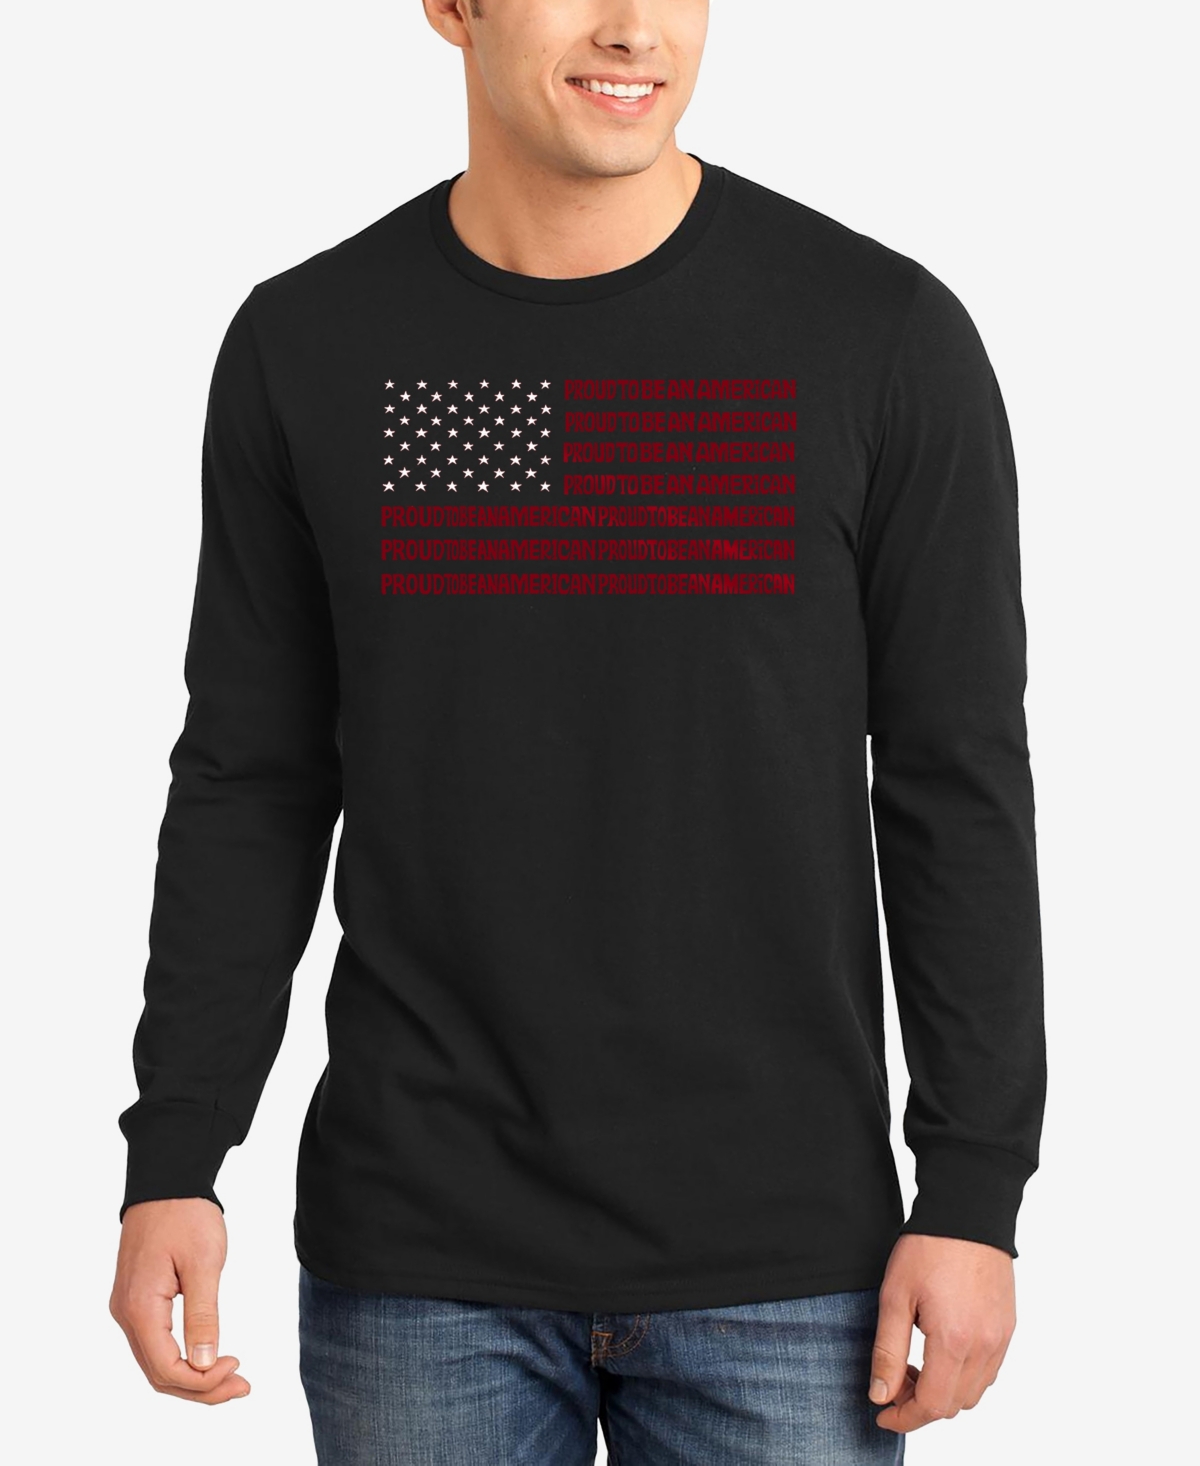 Proud To Be An American - Men's Word Art Long Sleeve T-Shirt - Black